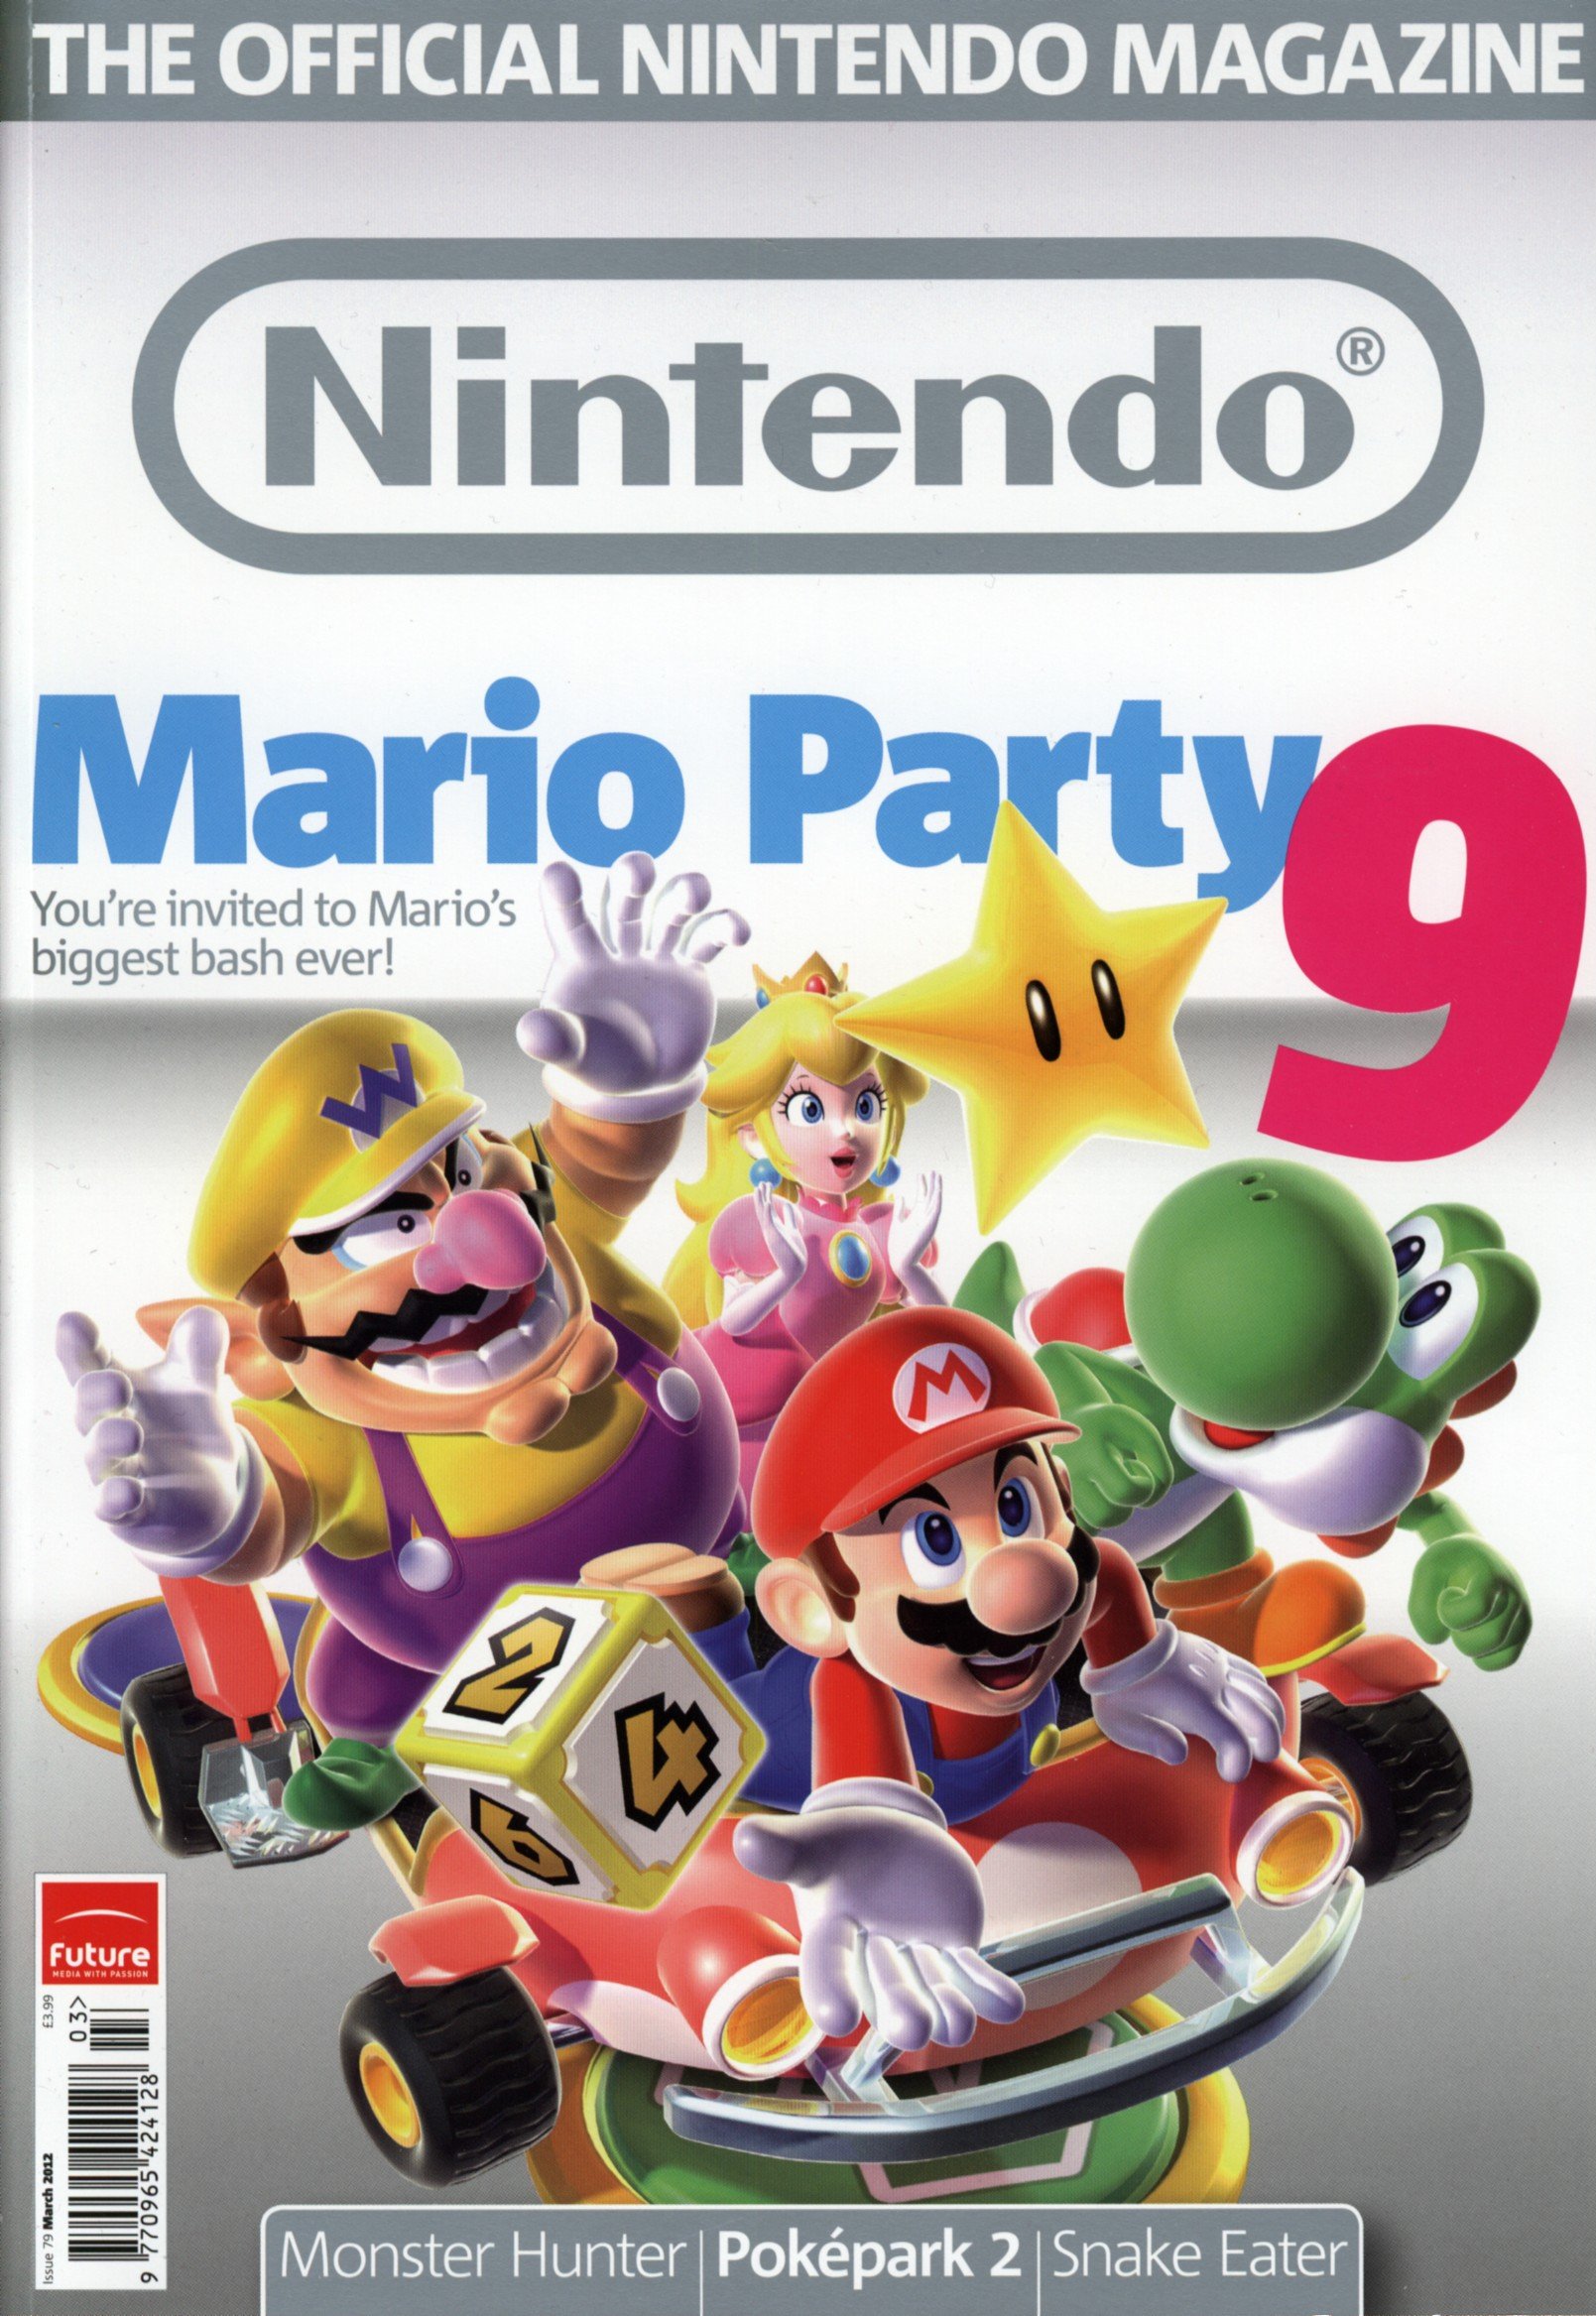 FileOfficial Nintendo Magazine Issue 79.jpg